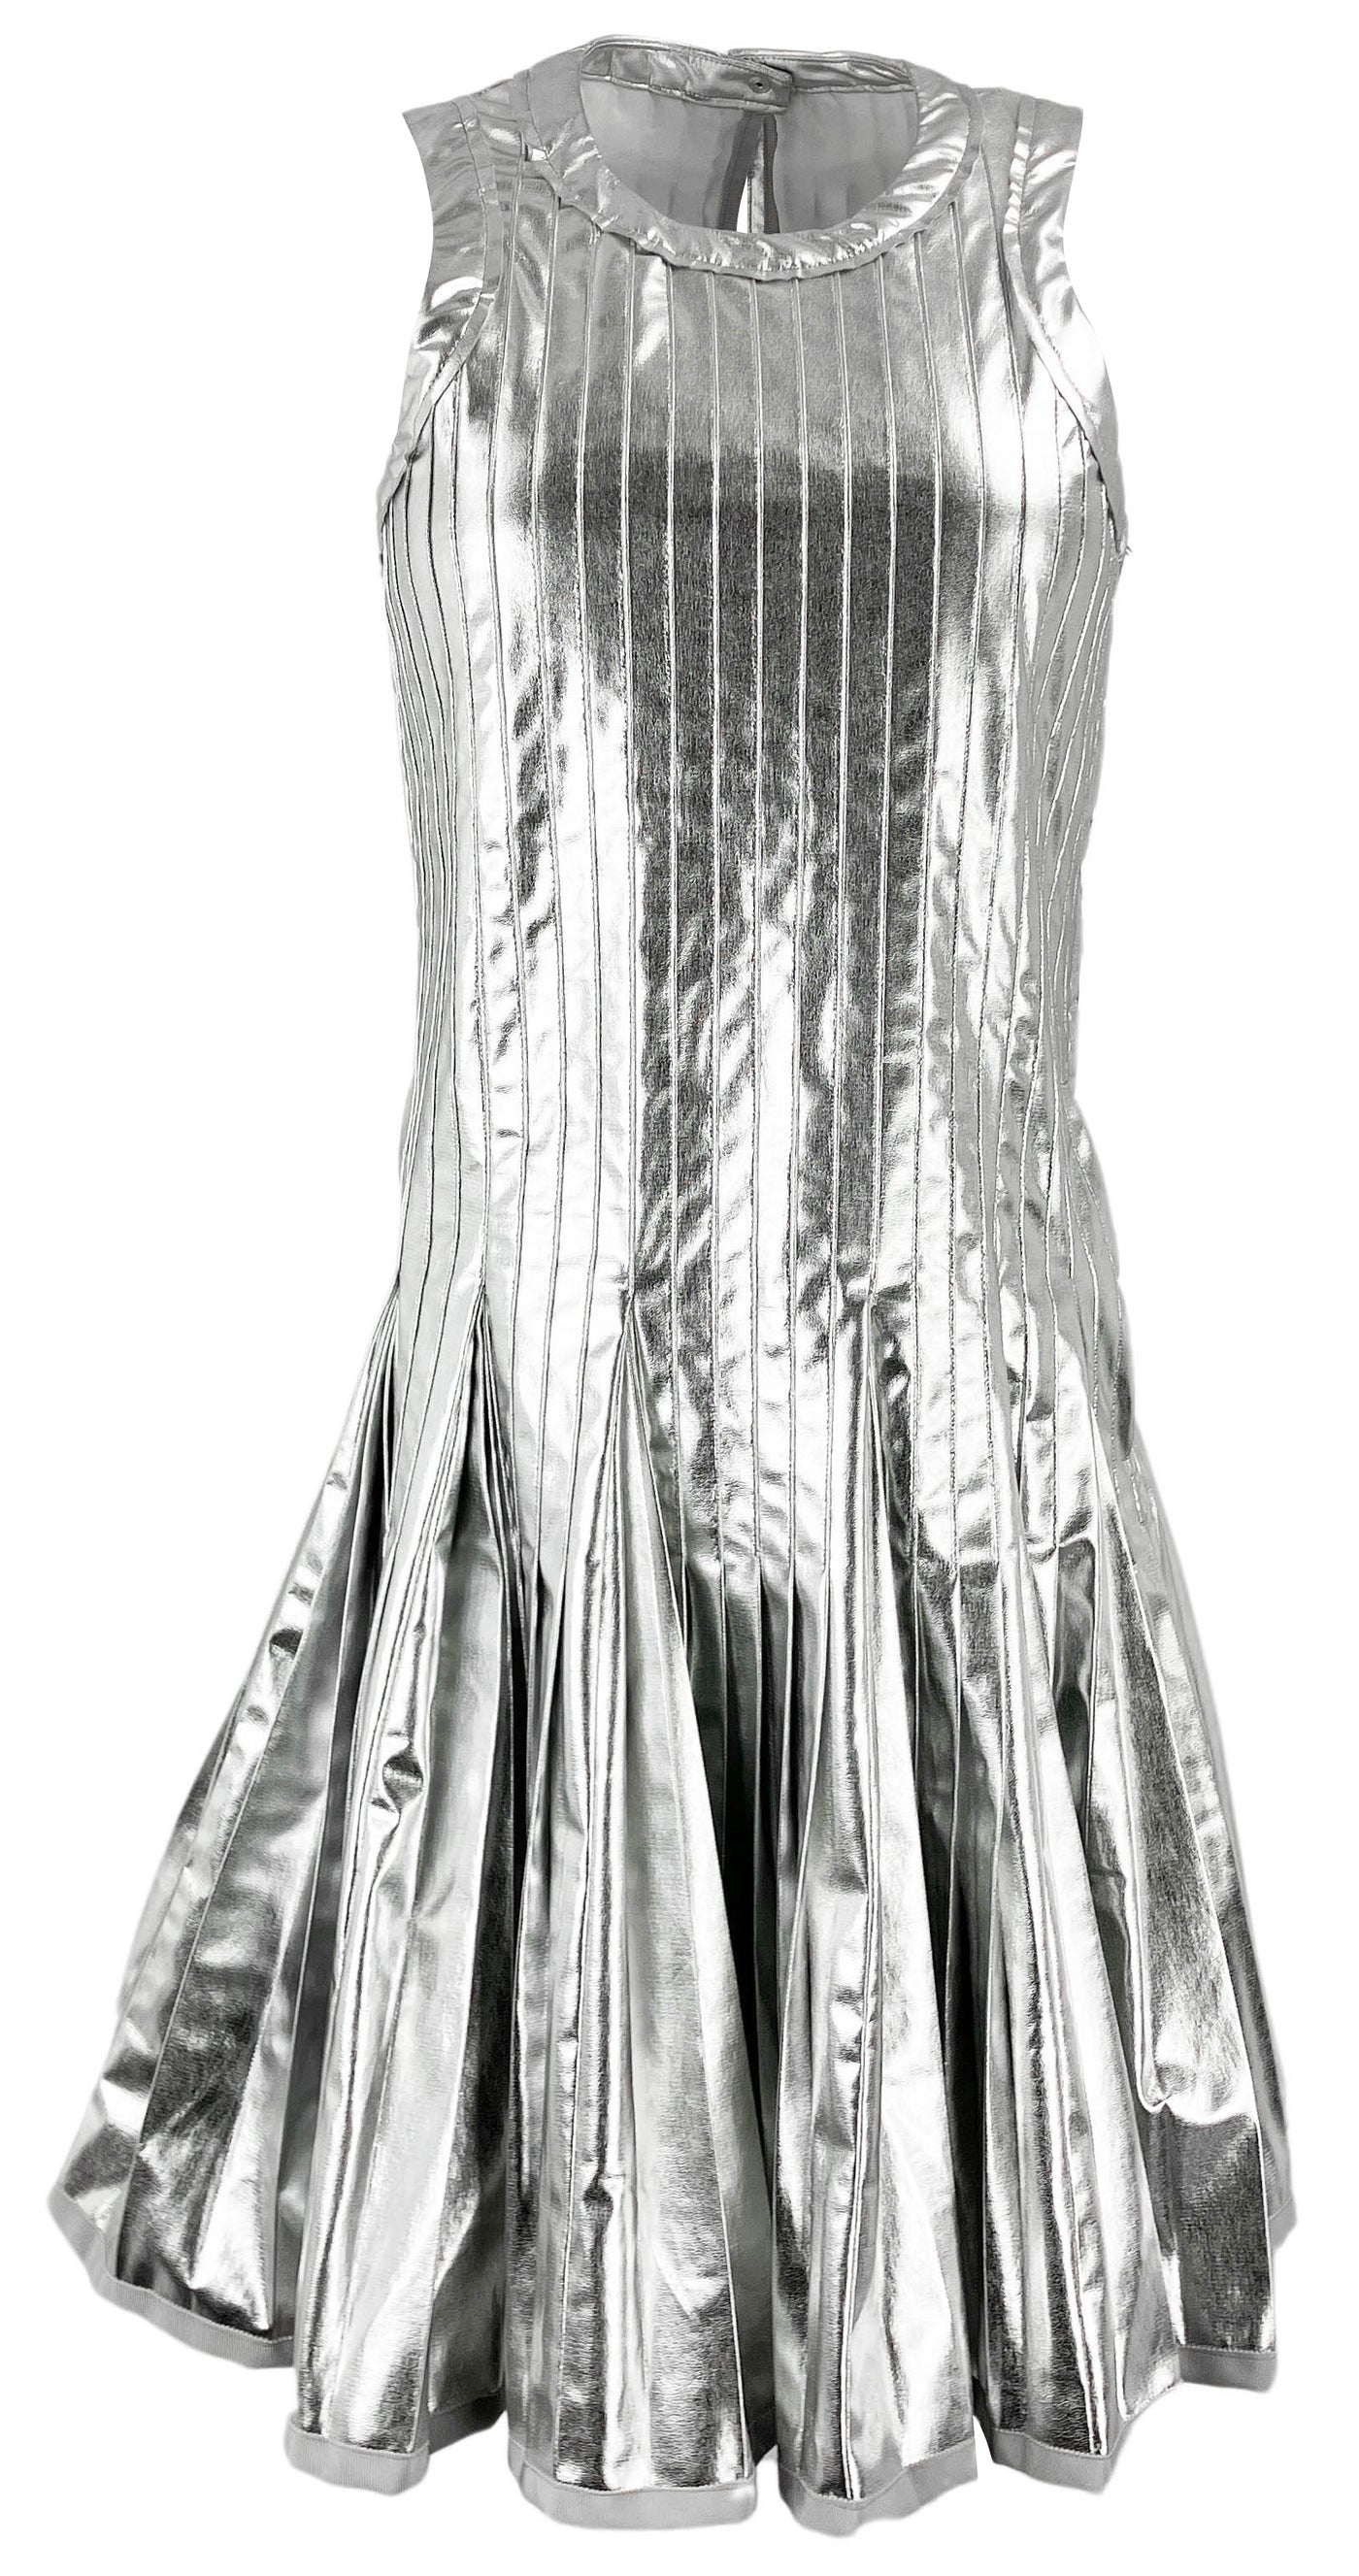 sacai Faux Leather PLeated Mini Dress in Silver - Discounts on Sacai at UAL